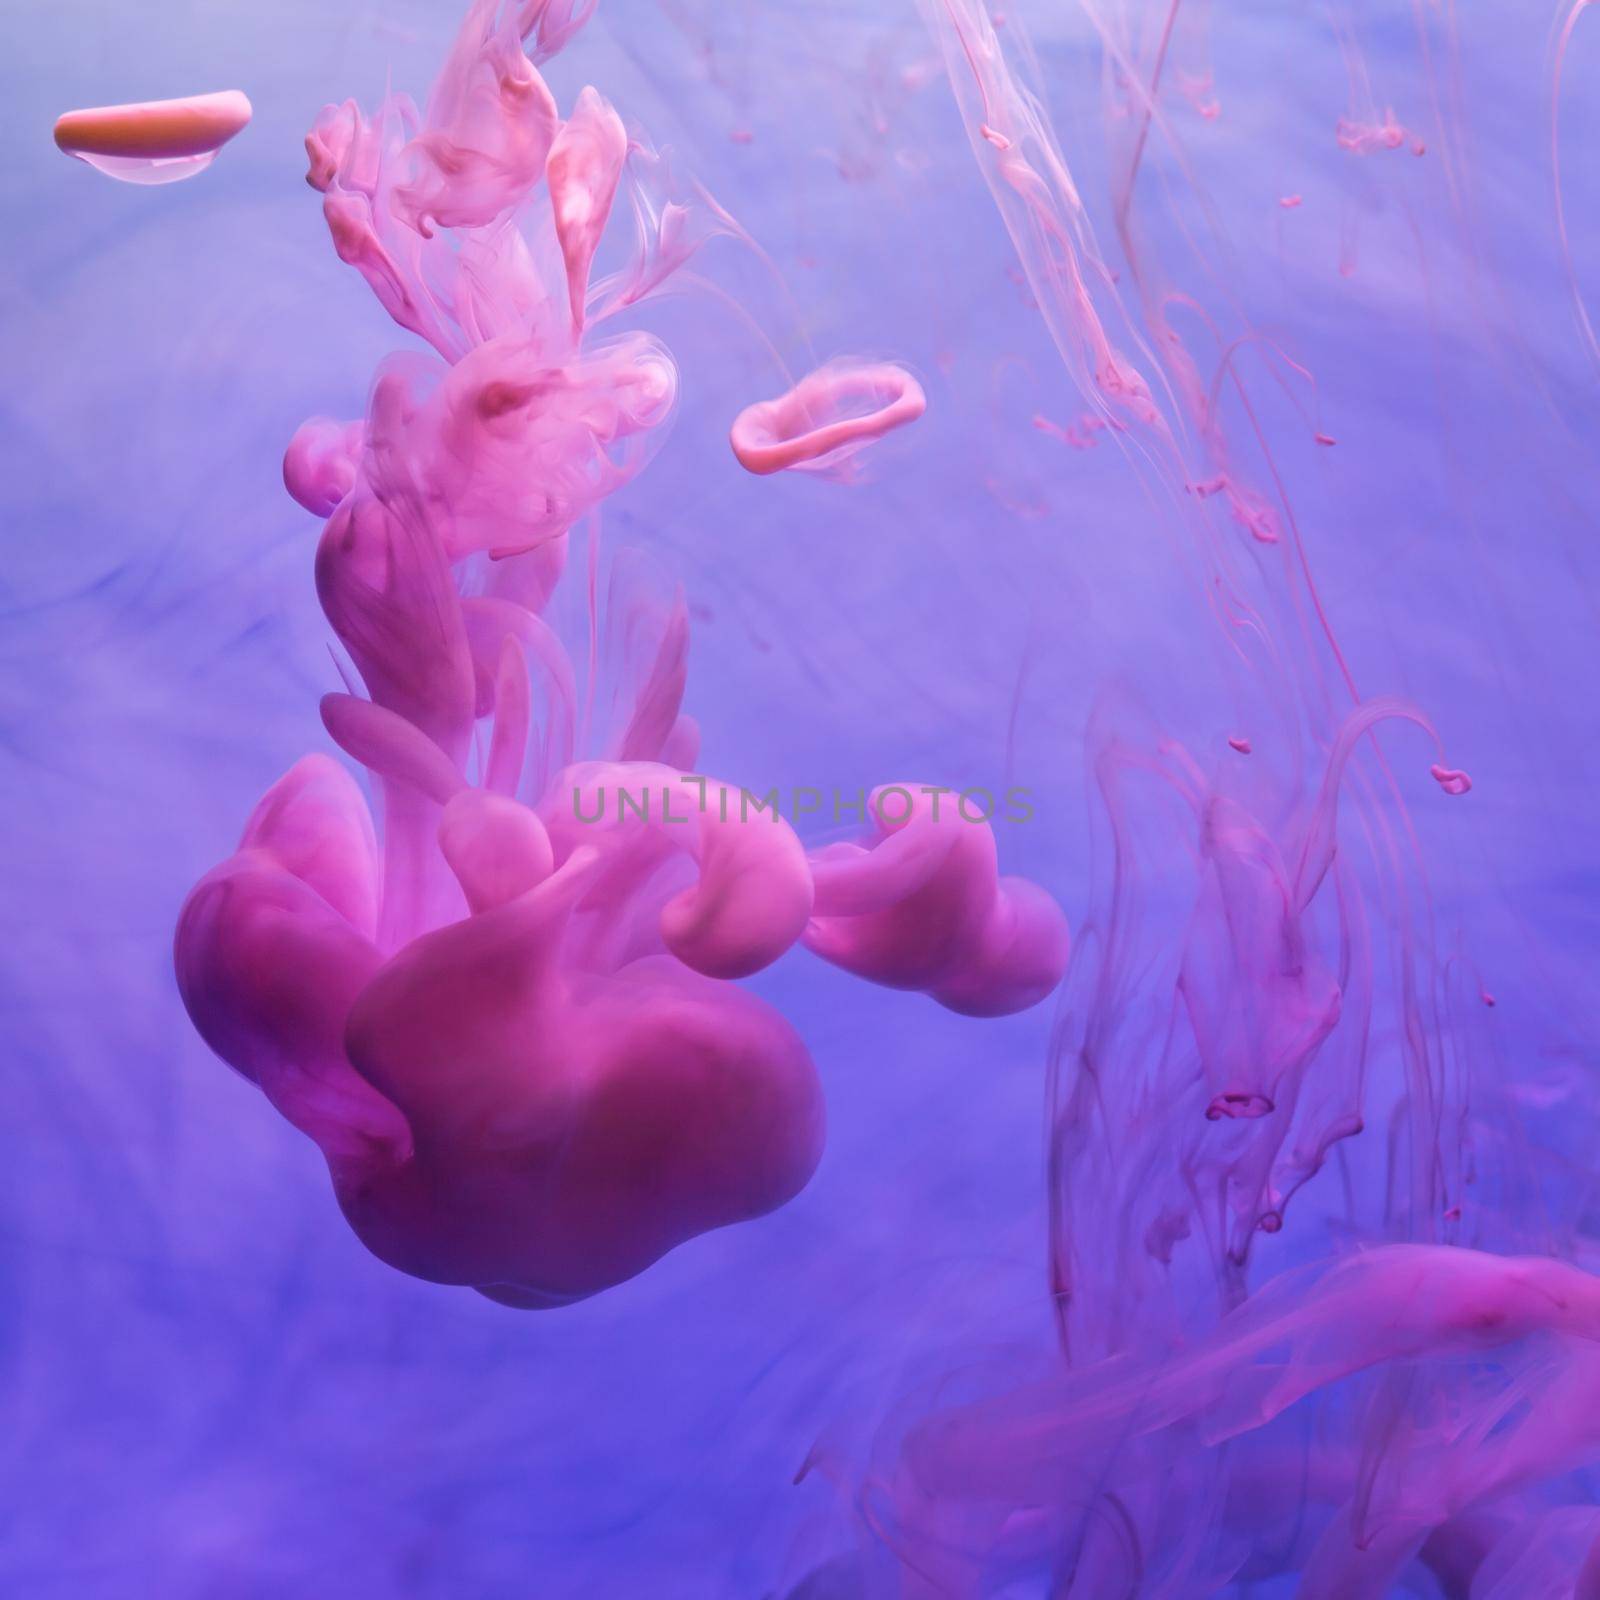 Pink inks in water on blue background by zhu_zhu